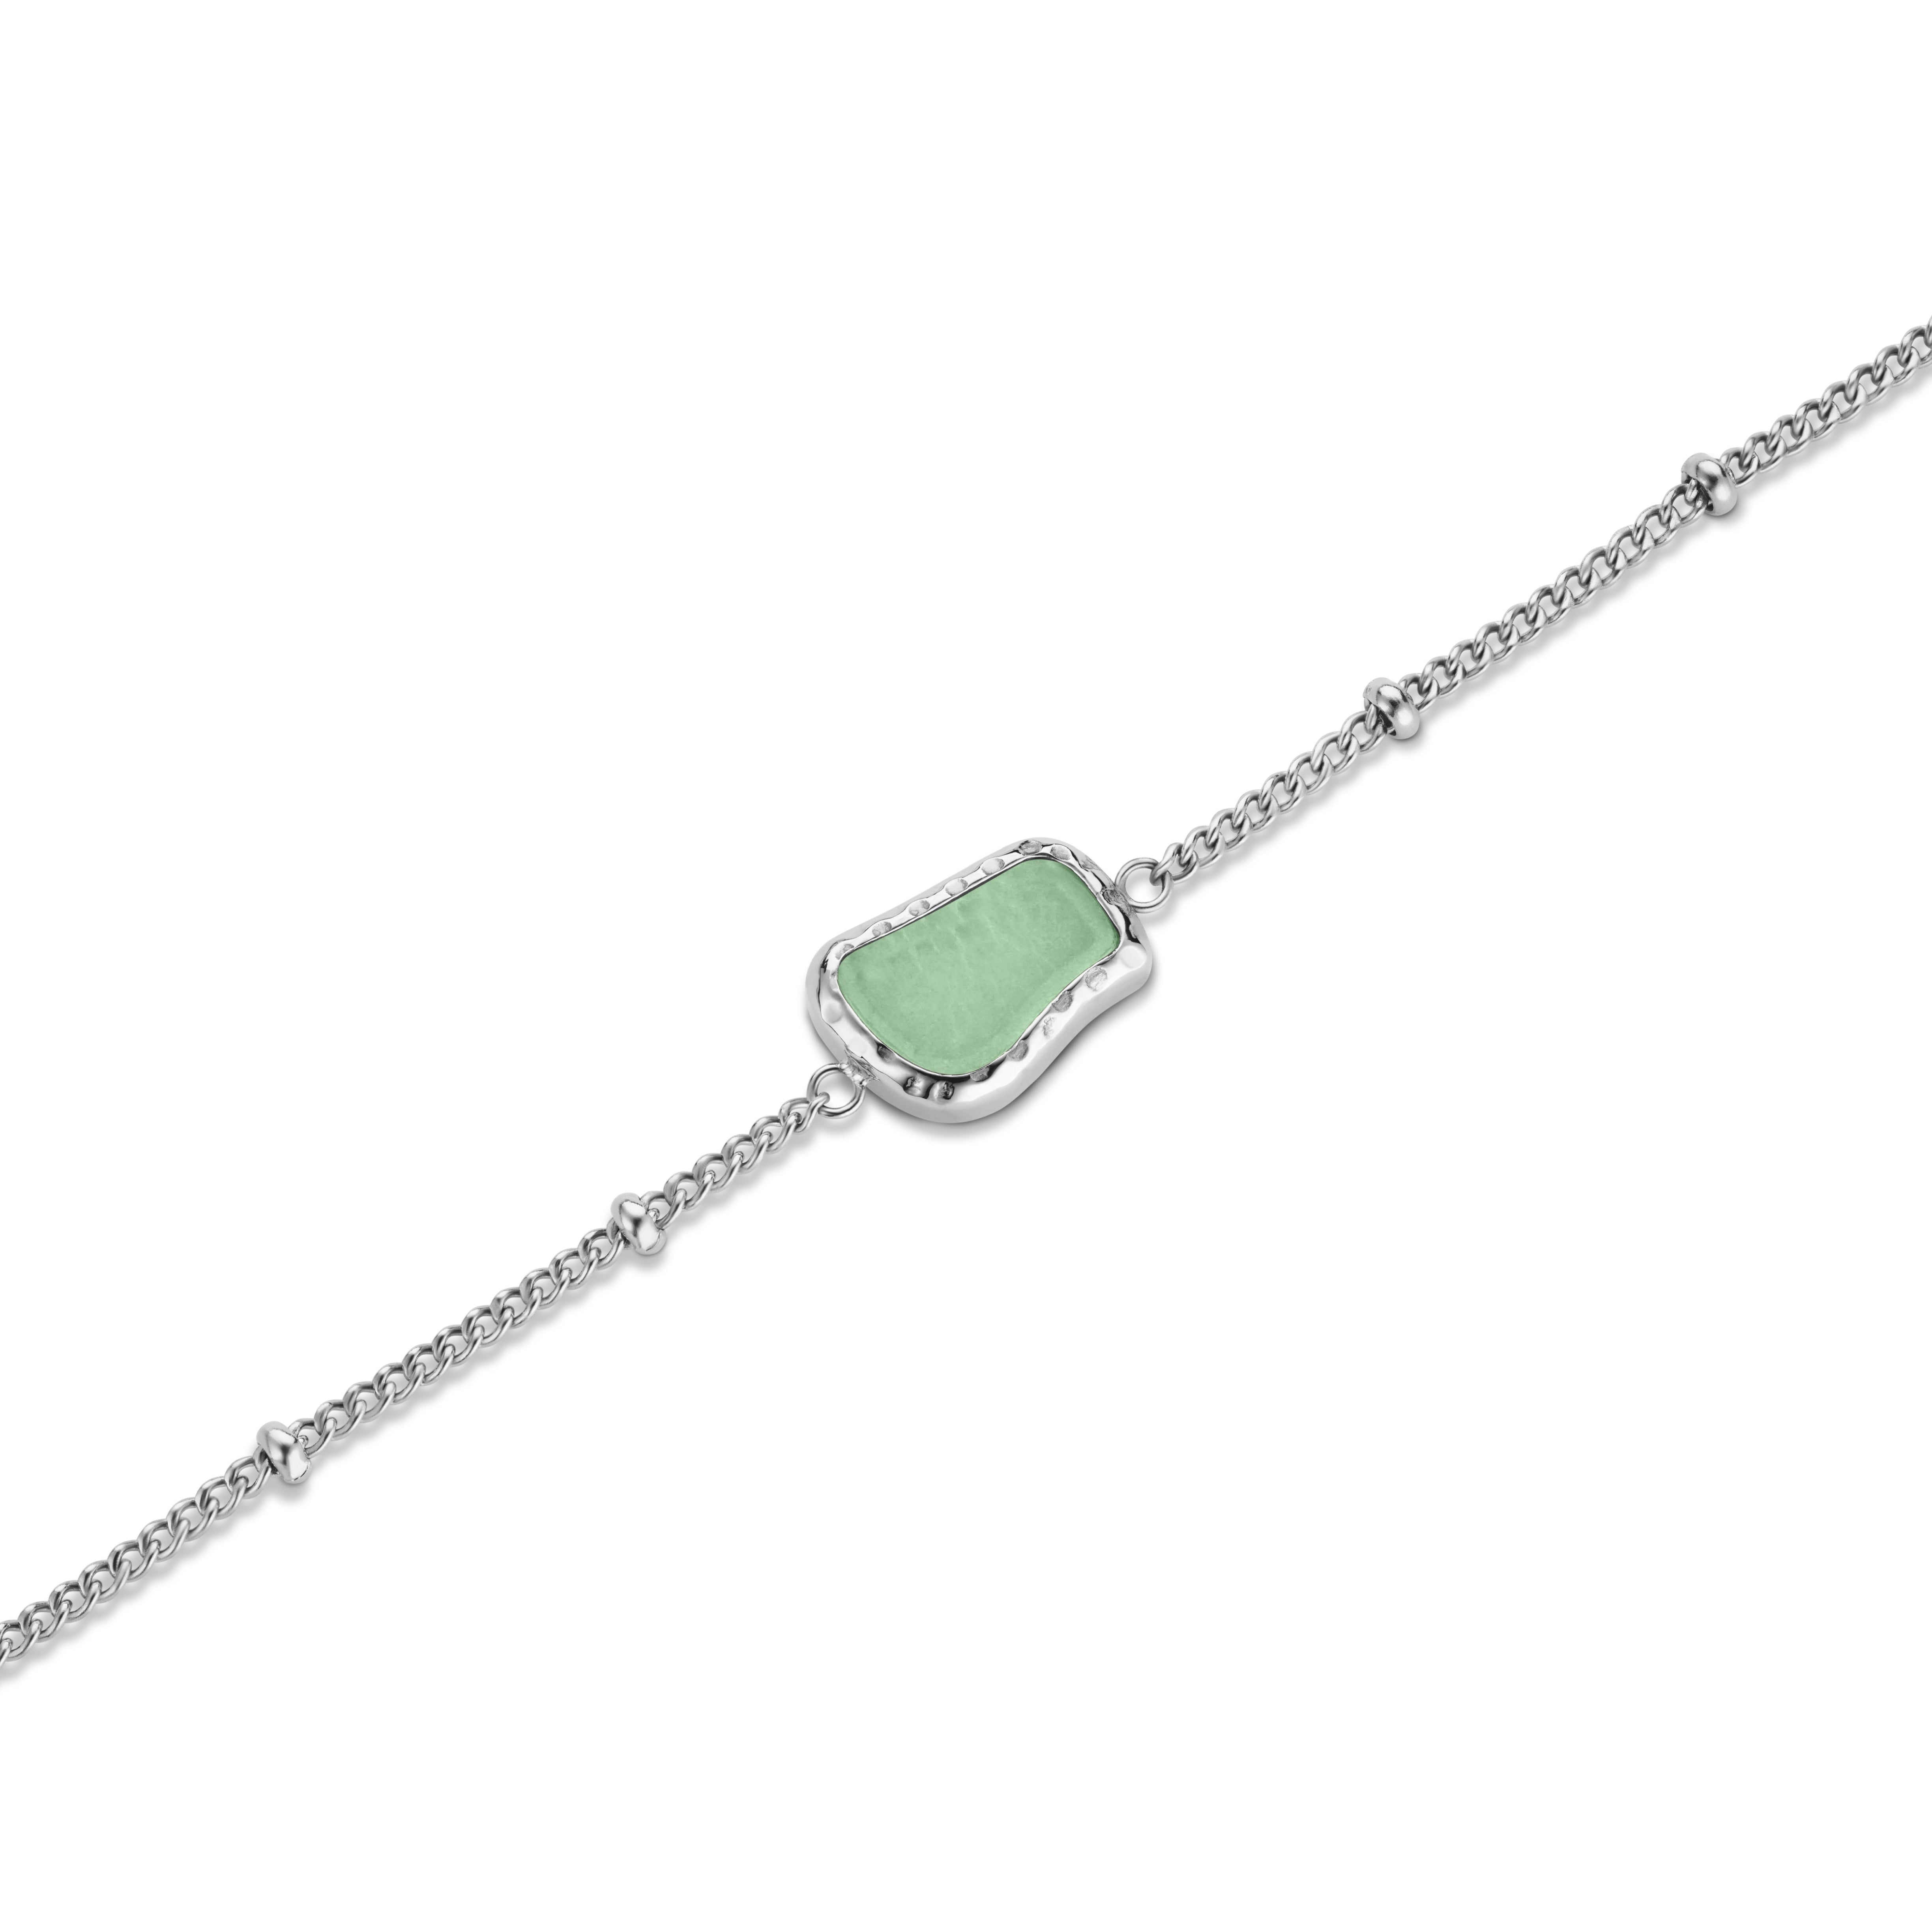 BLAK - Rosefield Gemstone Bracelet - Jade/Silver